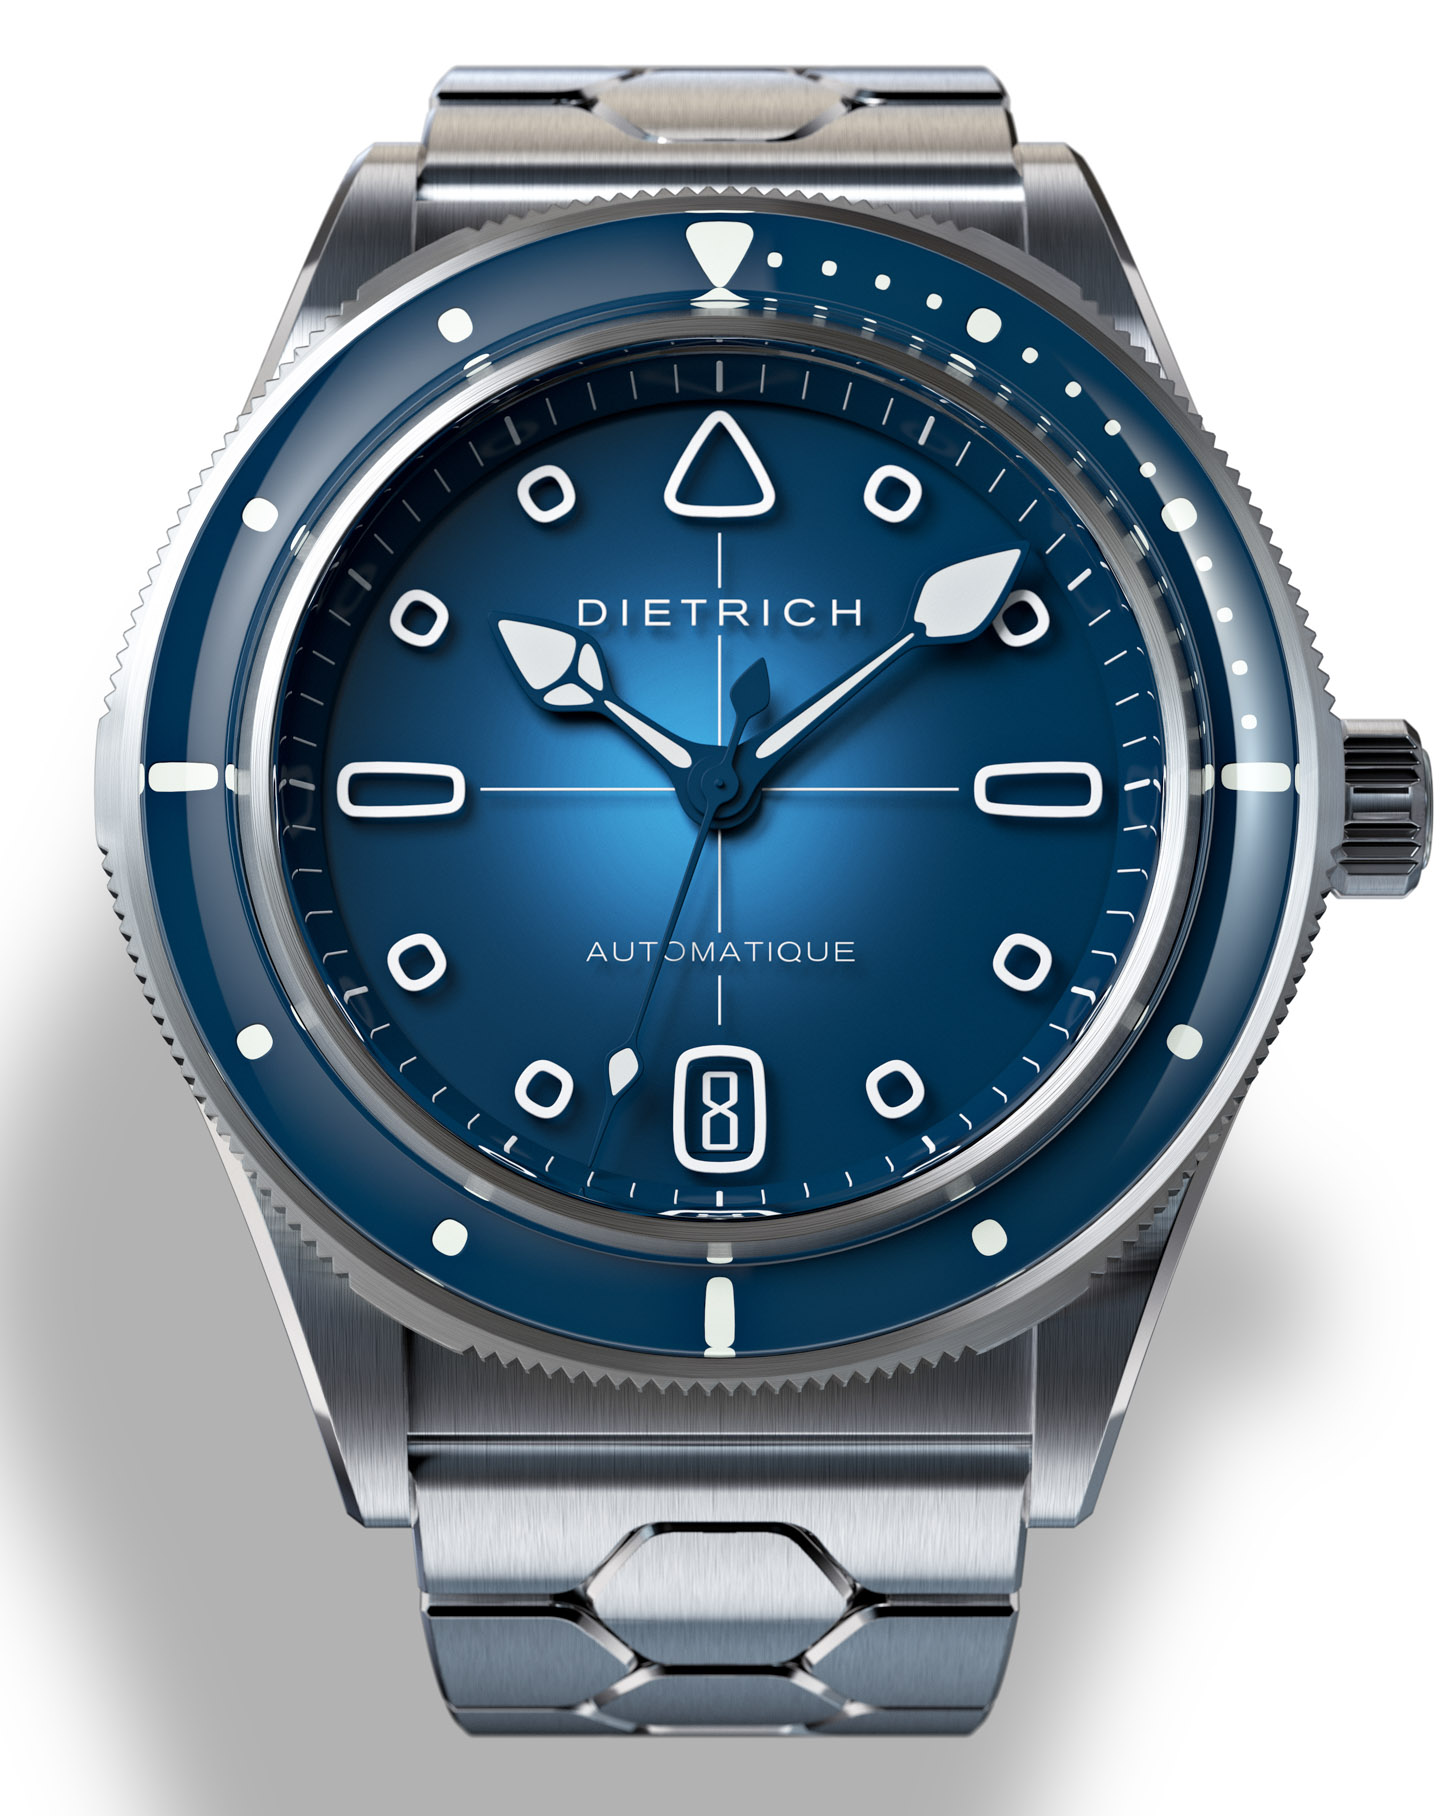 Nouveauté - 1000€ : Dietricj Skin Diver SD-1 Dietrich-SD-1-skin-diver-watches-2